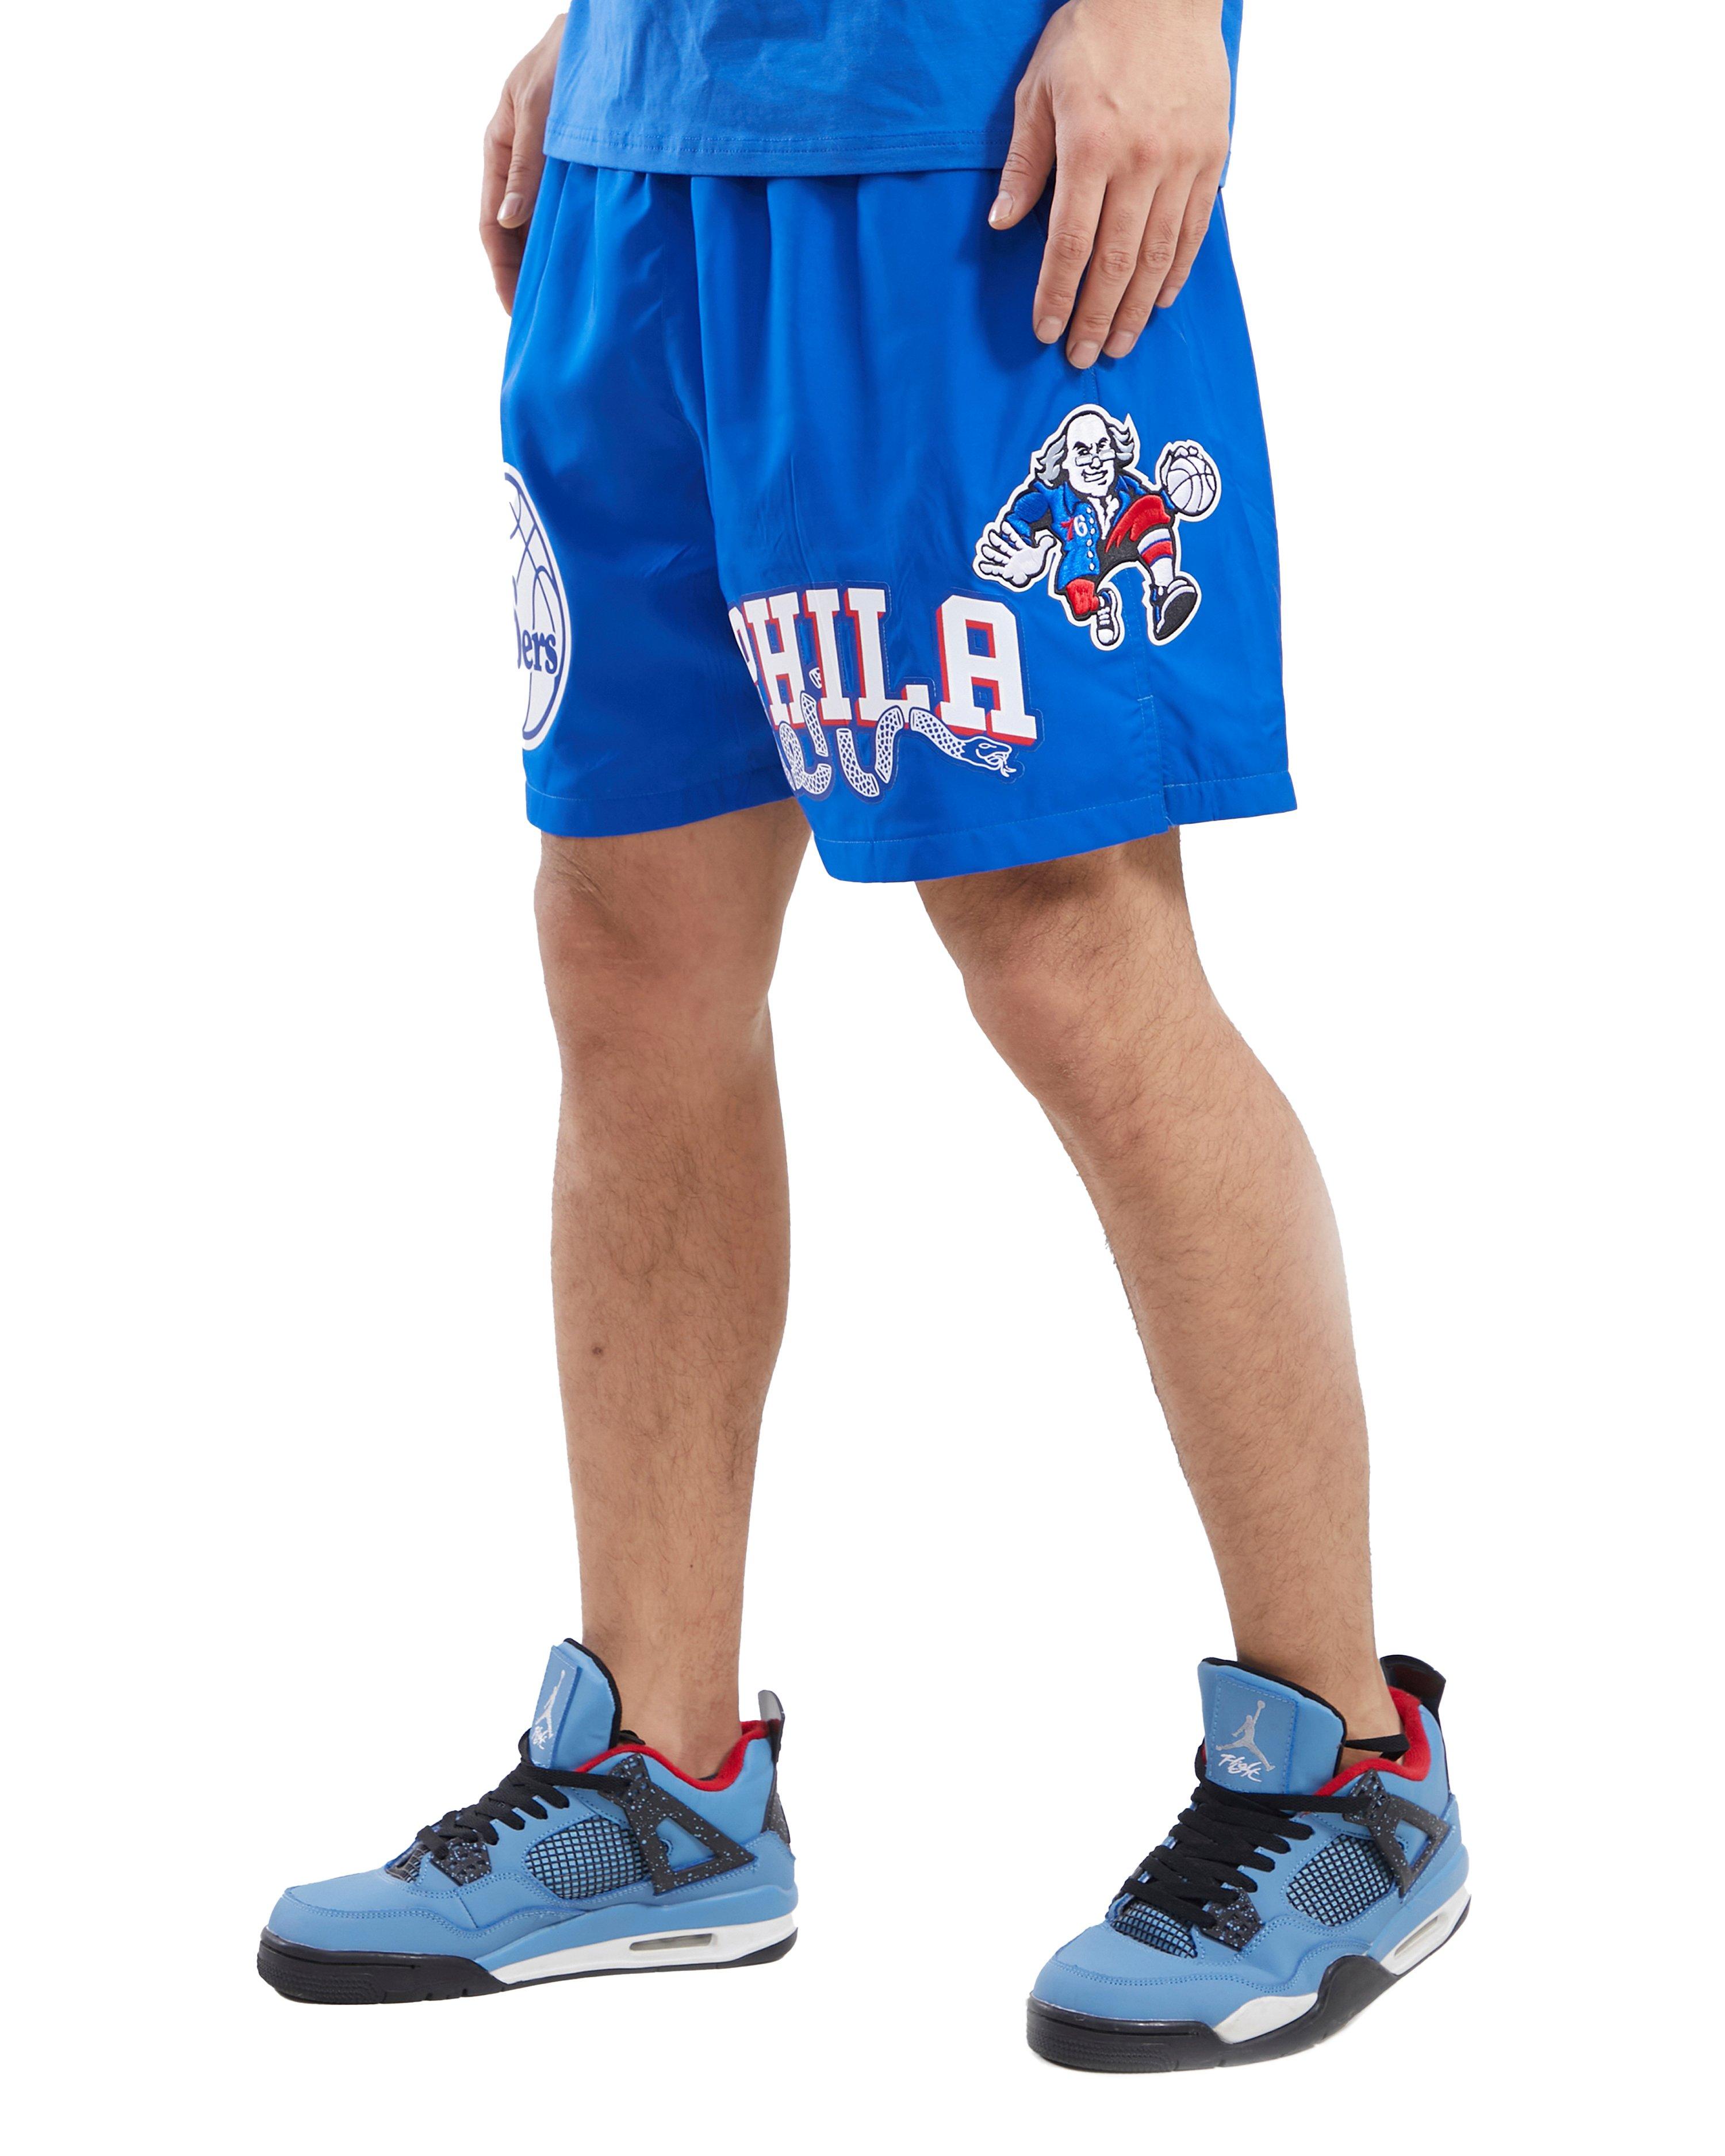 Nike Men's Philadelphia 76ers Blue Logo T-Shirt, Small